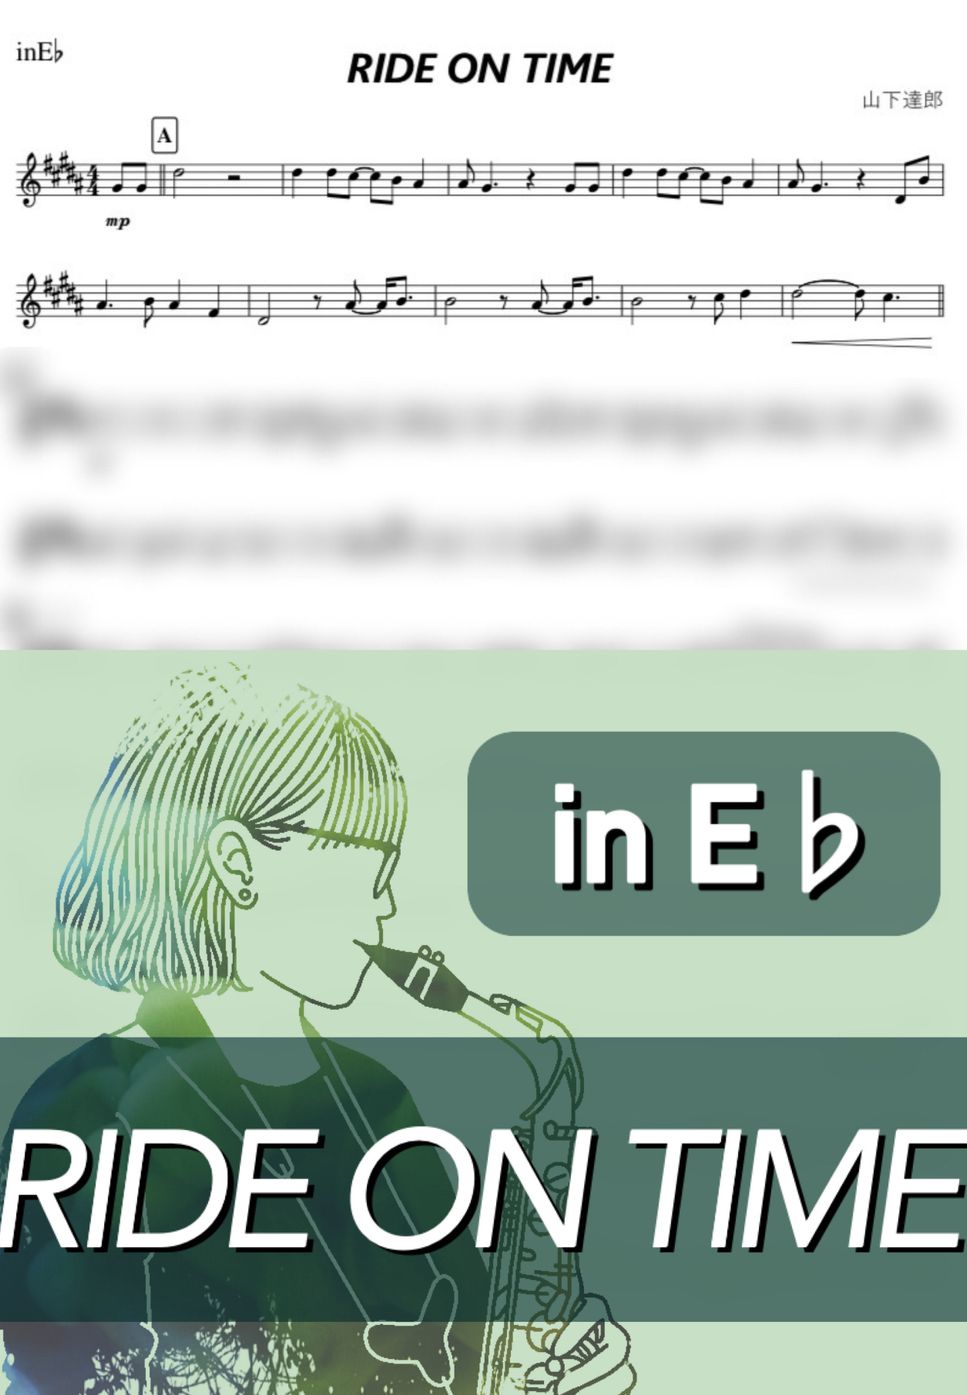 山下達郎 - RIDE ON TIME (E♭) by kanamusic